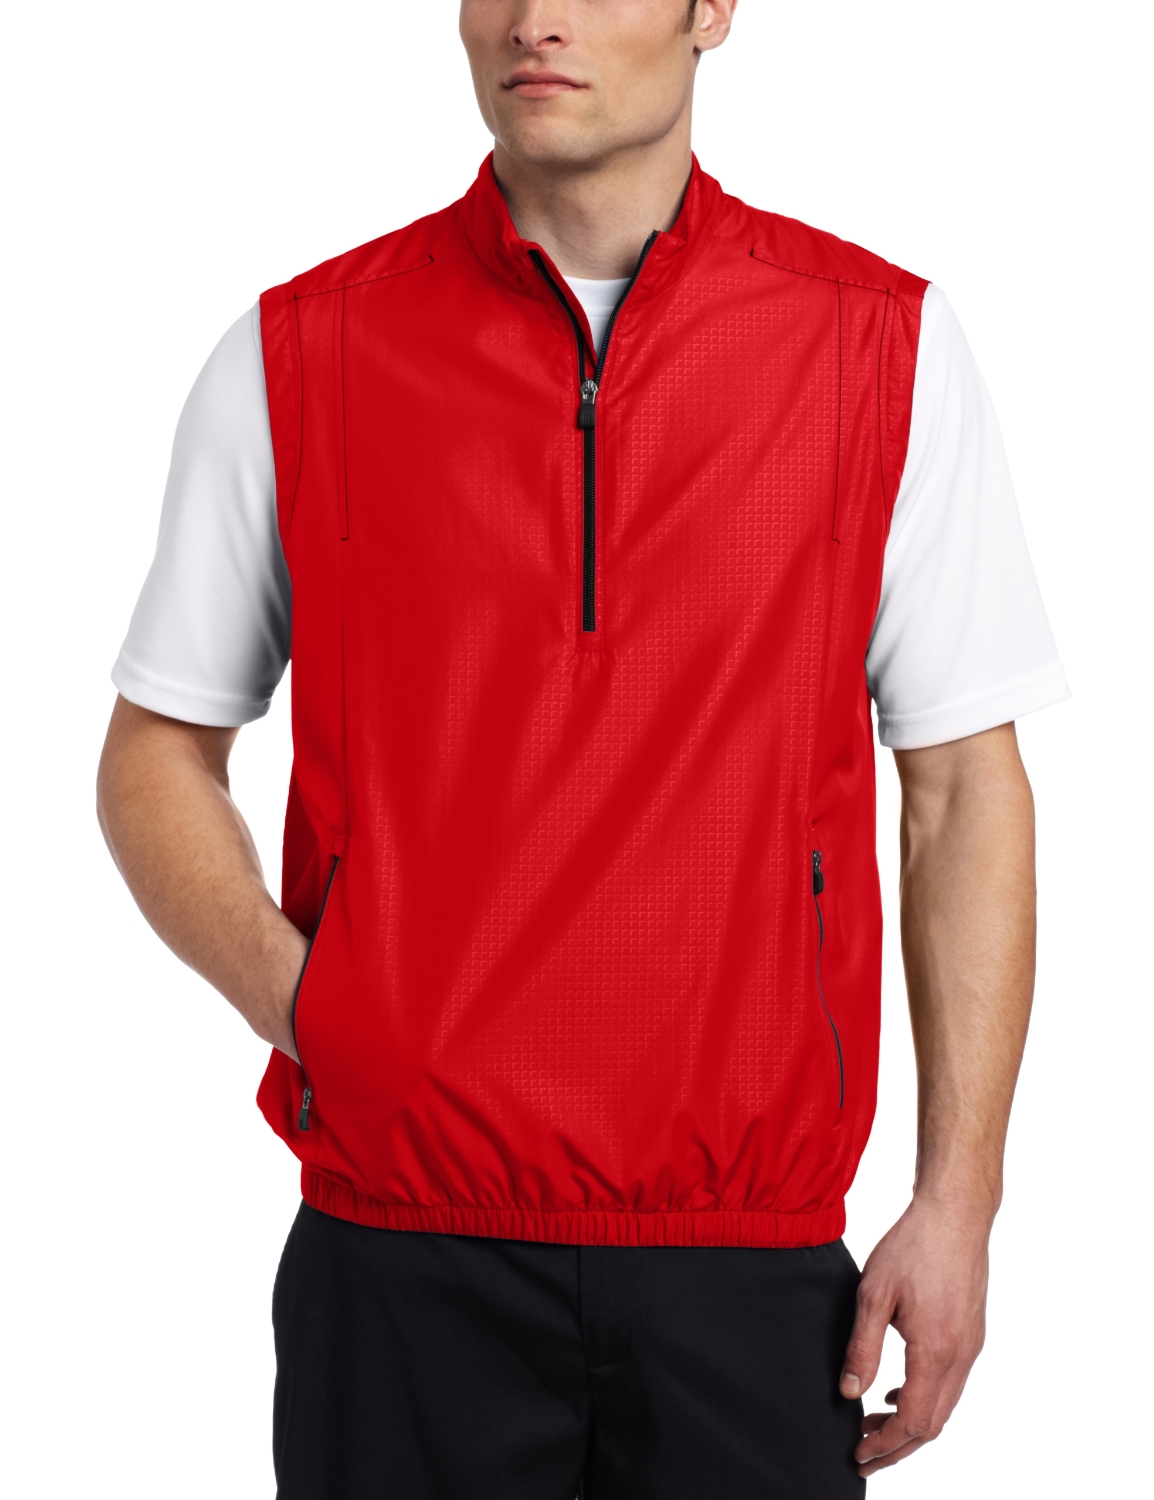 adidas golf vest mens